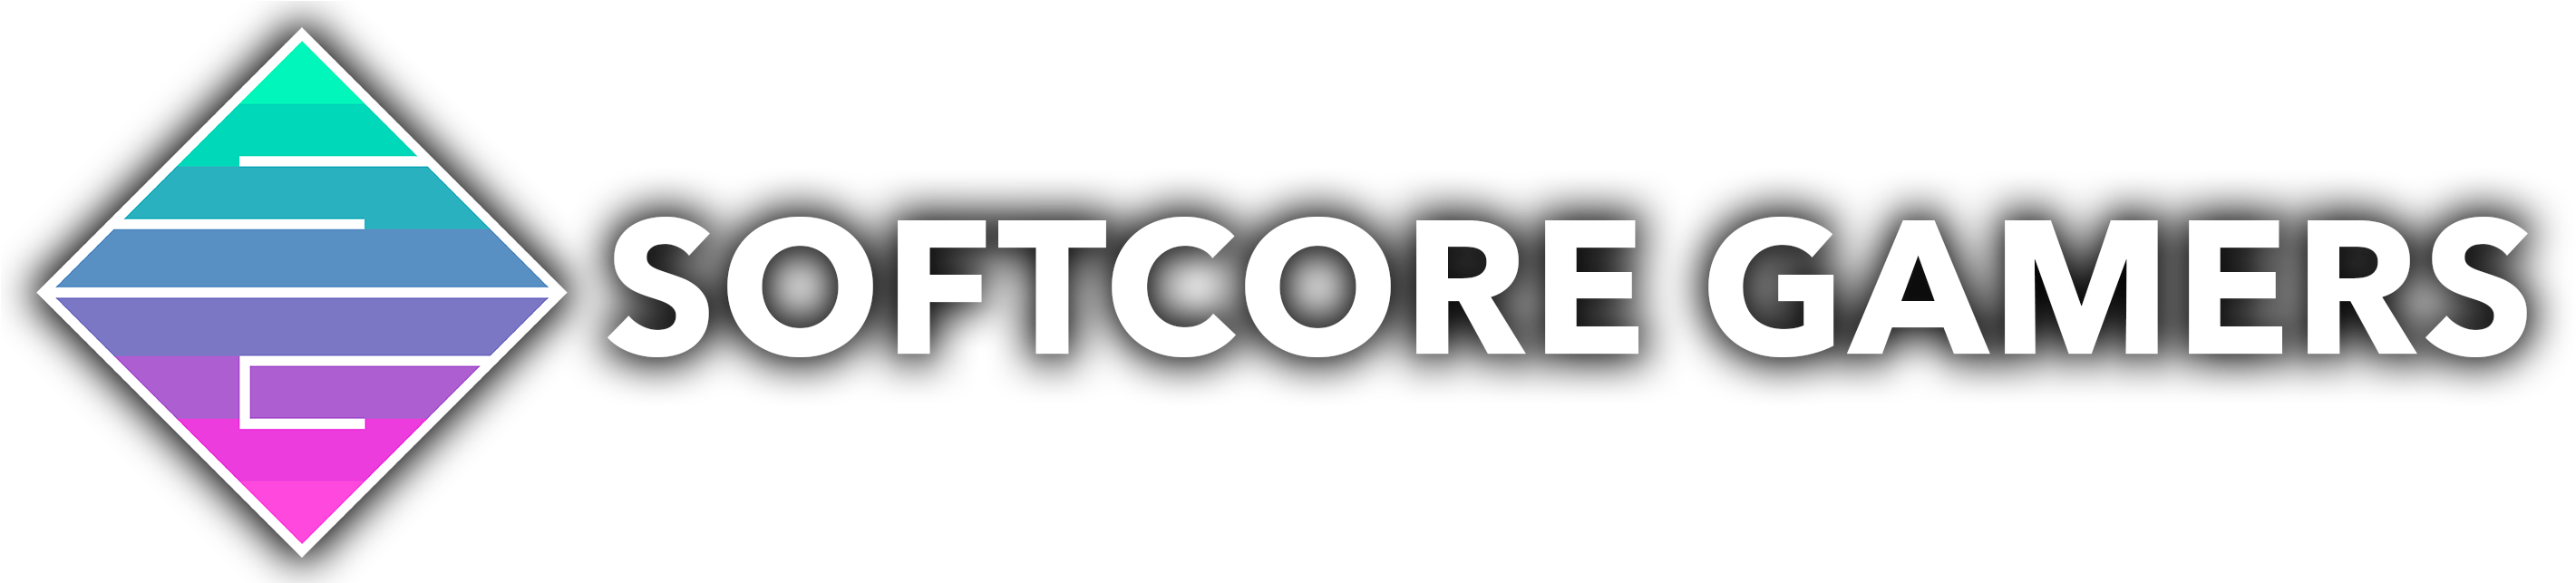 Softcore Gamers Logo - Sürçaysan (2851x642), Png Download